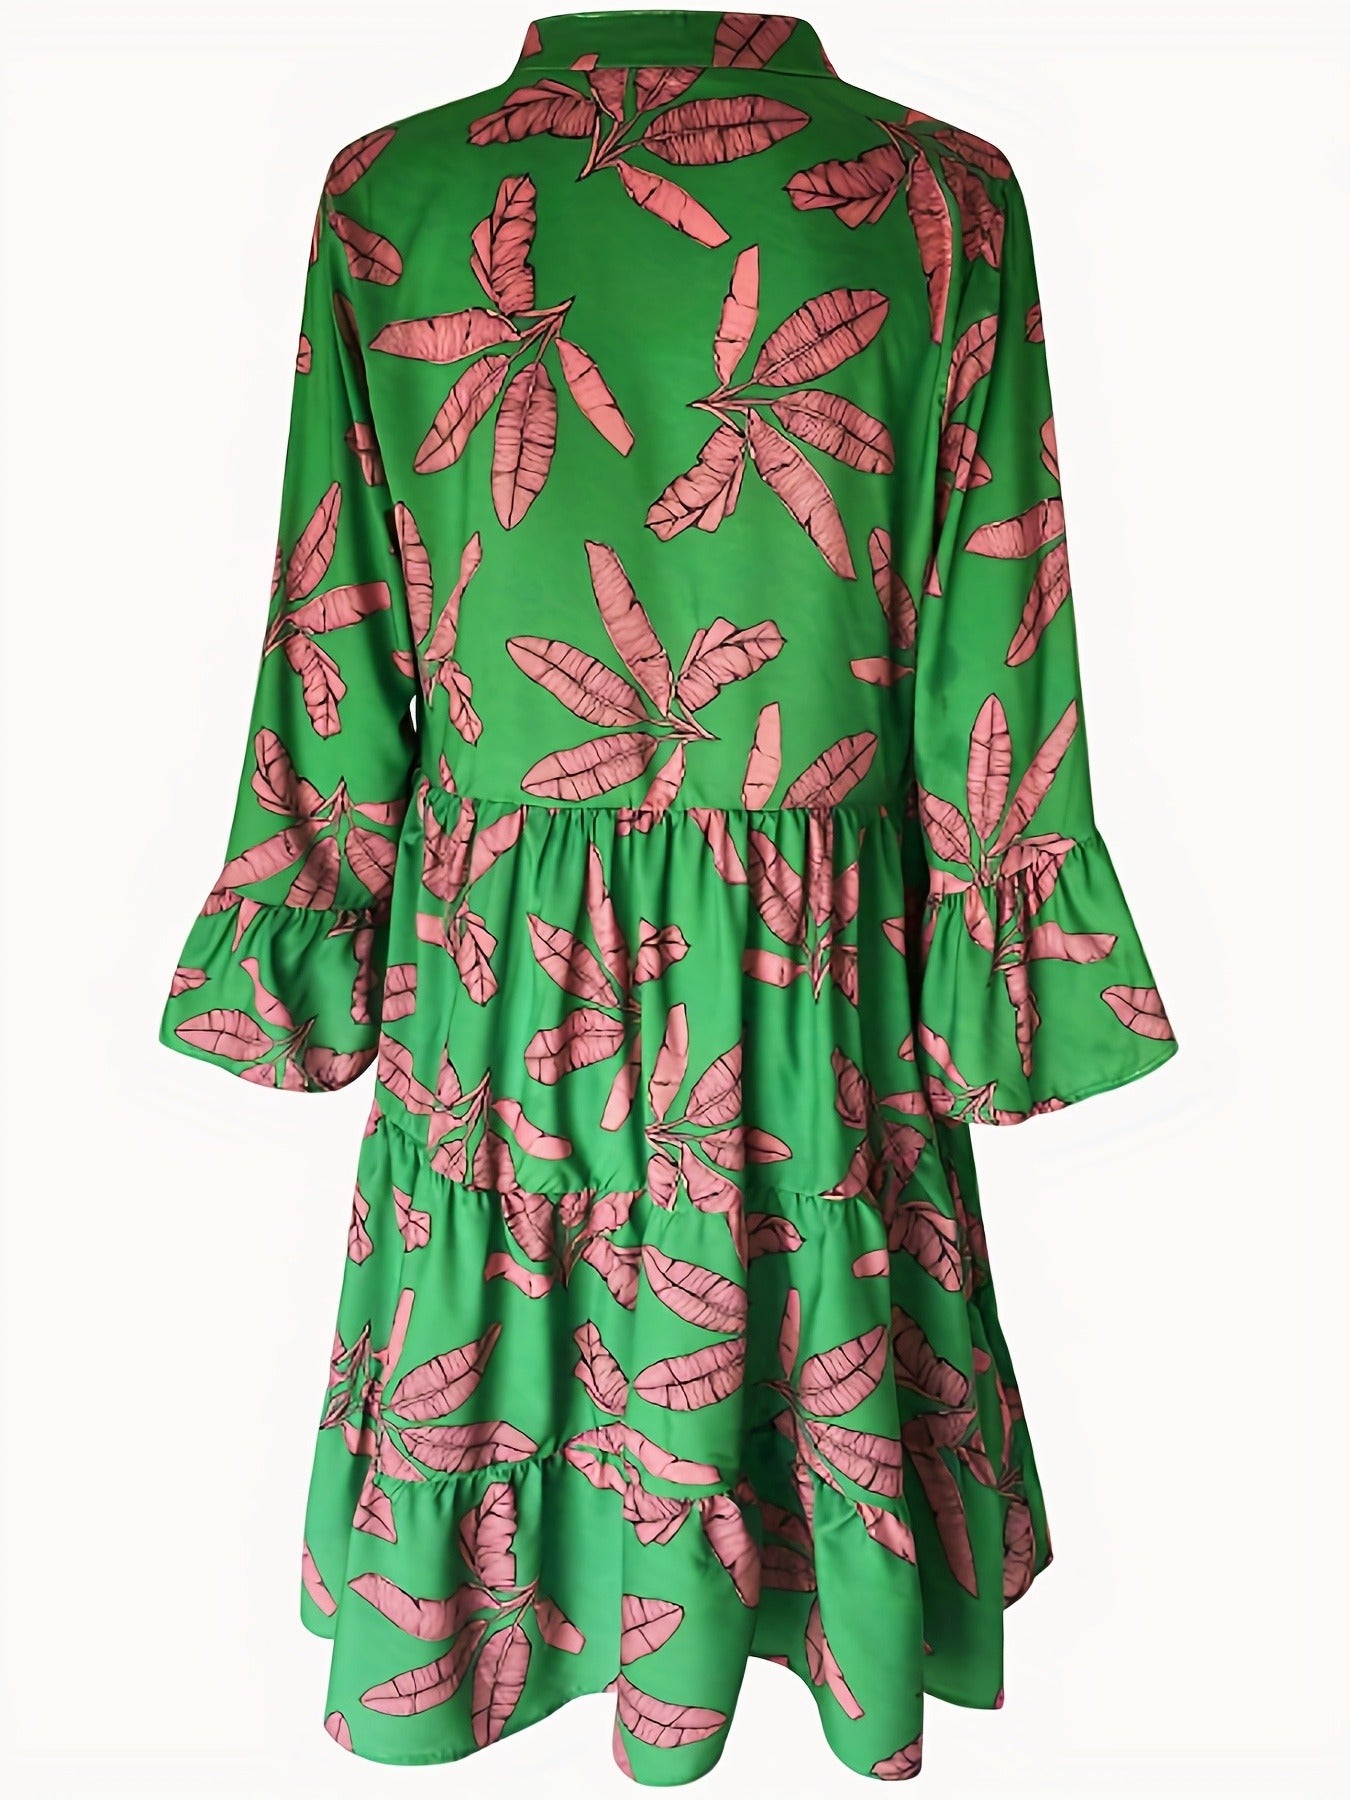 Vorioal Leaves Print Dress